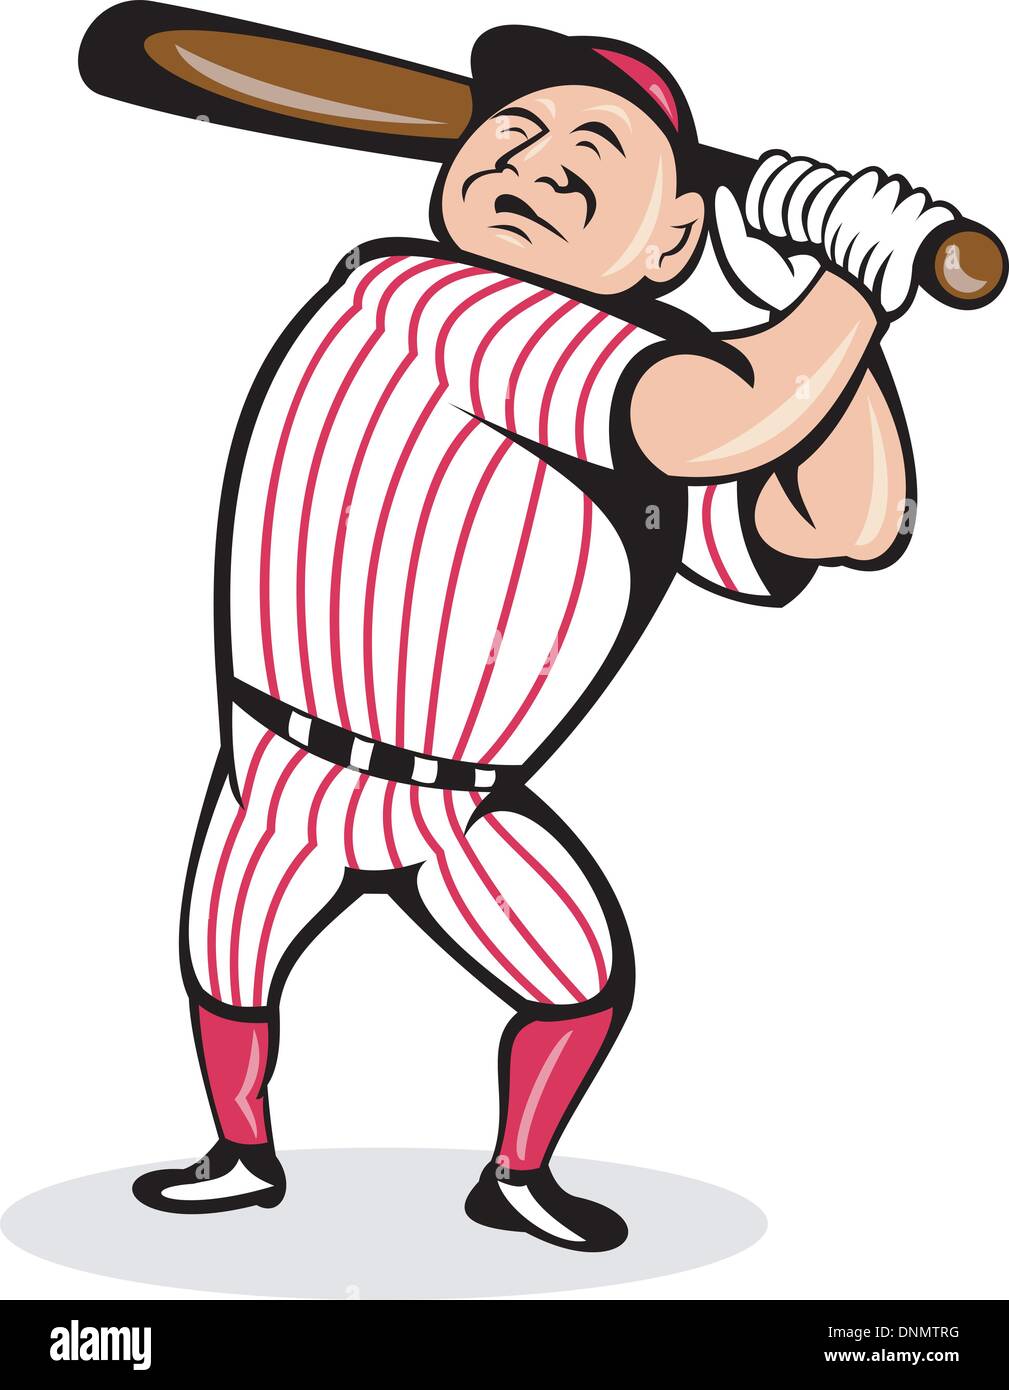 illustration of a cartoon baseball player swinging a bat Stock